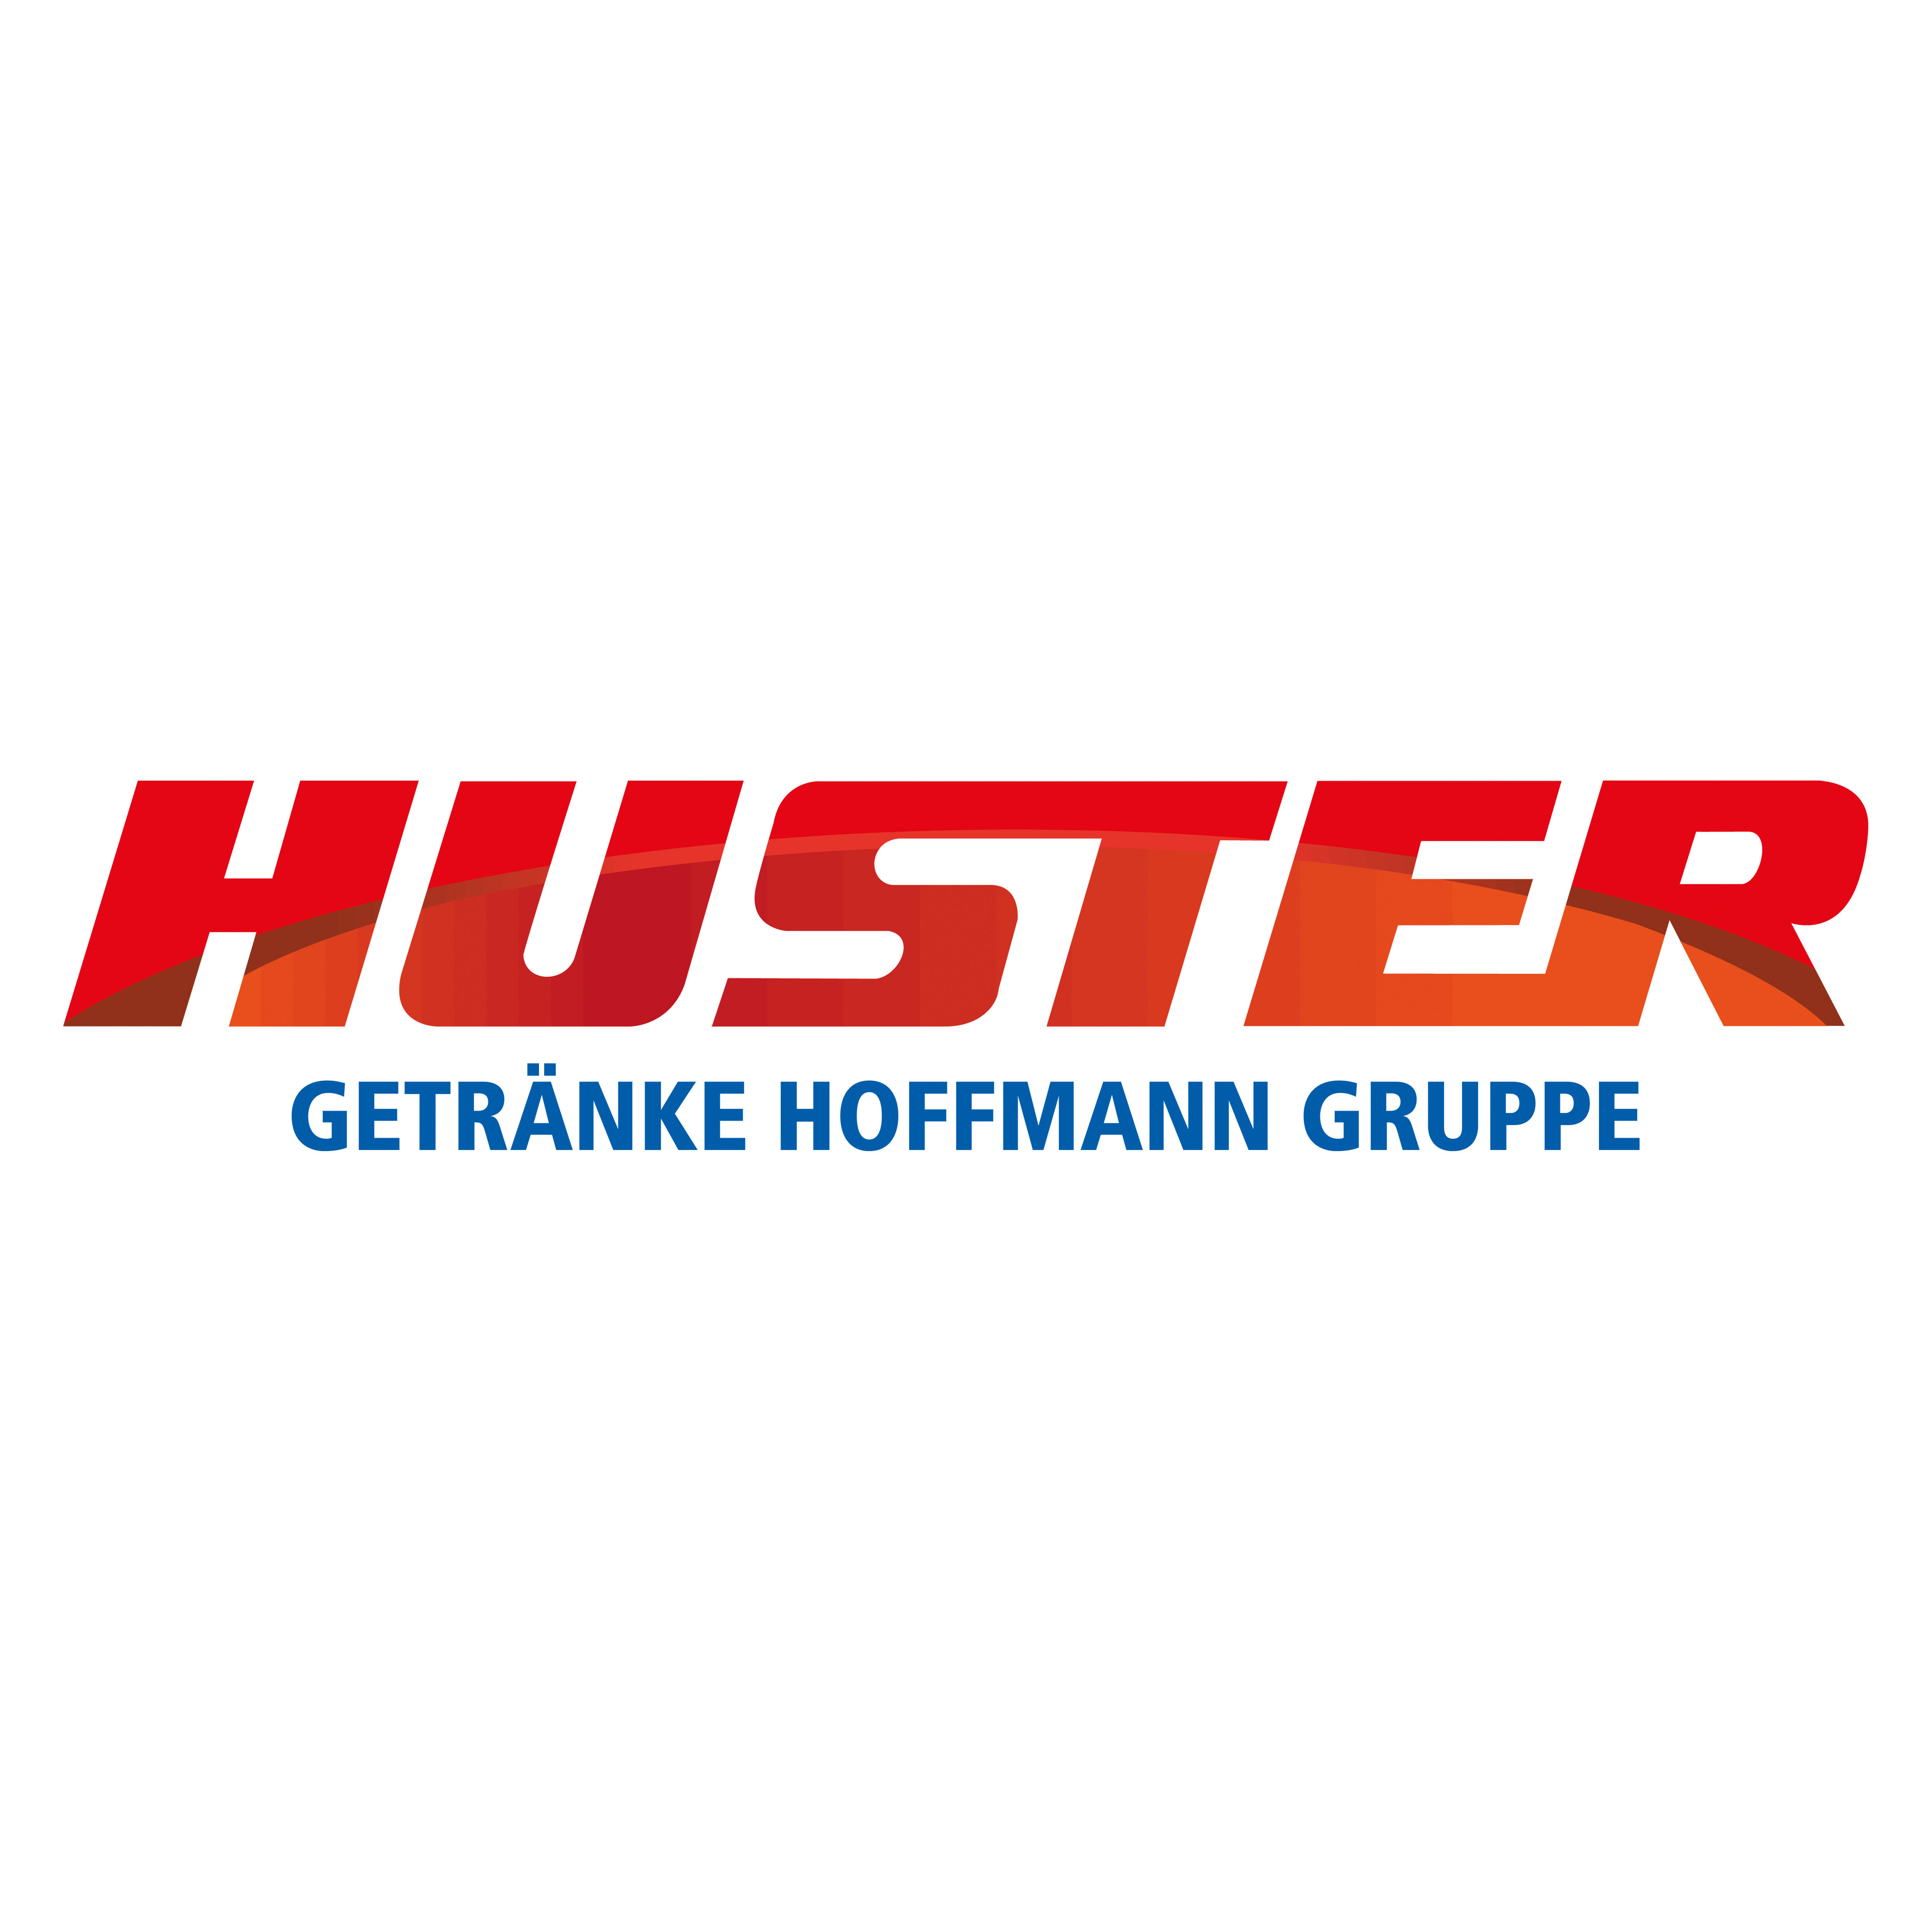 Huster Getränke Hoffmann Gruppe in Zwickau - Logo